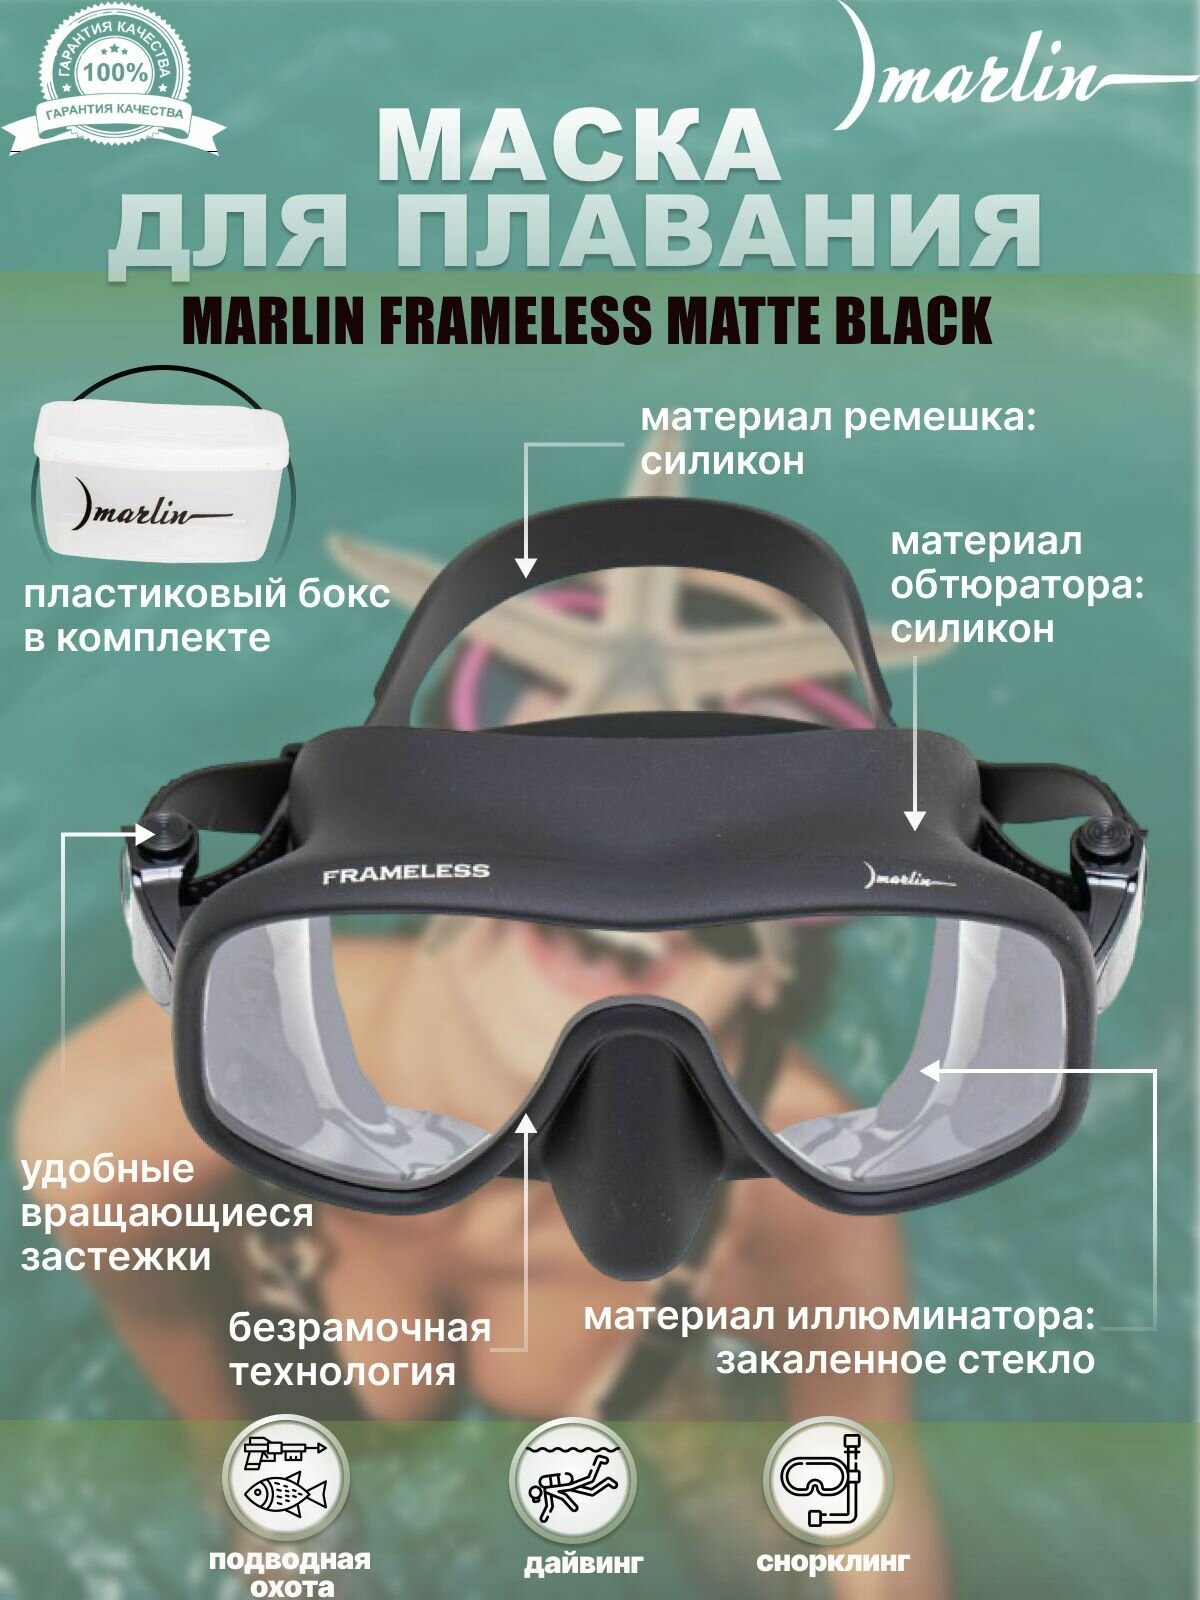 Маска MARLIN FRAMELESS matte Black